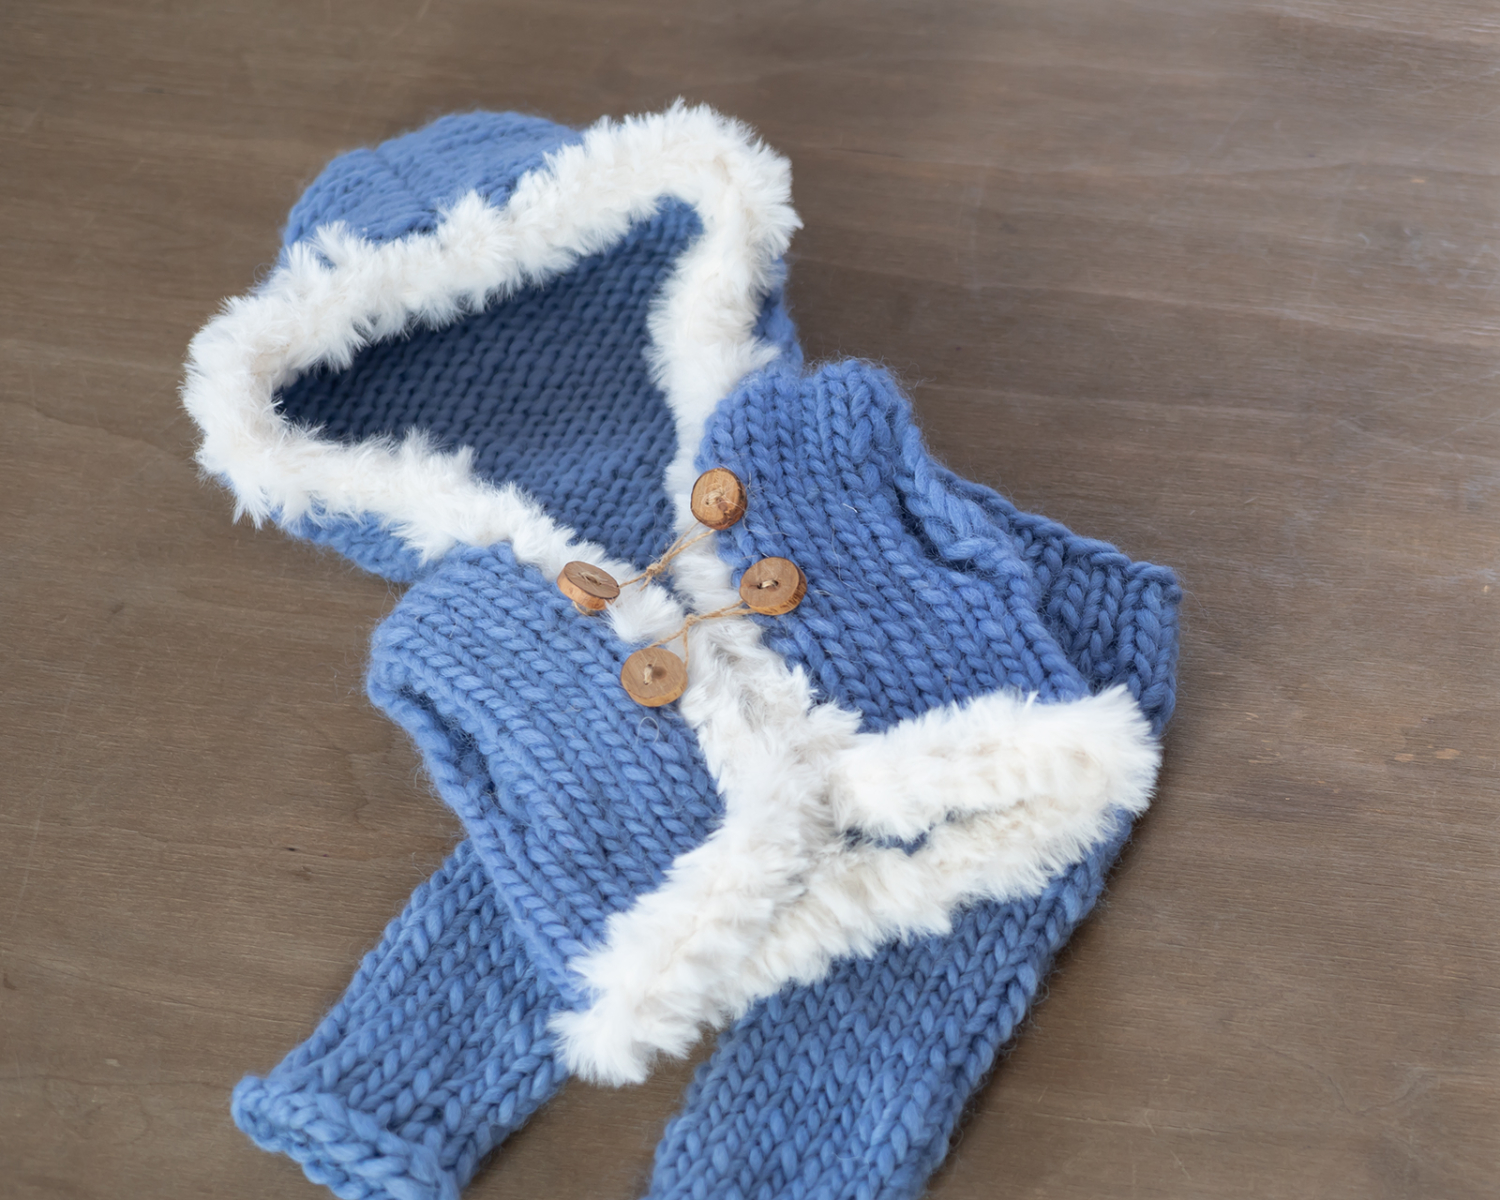 Blue knitted vest